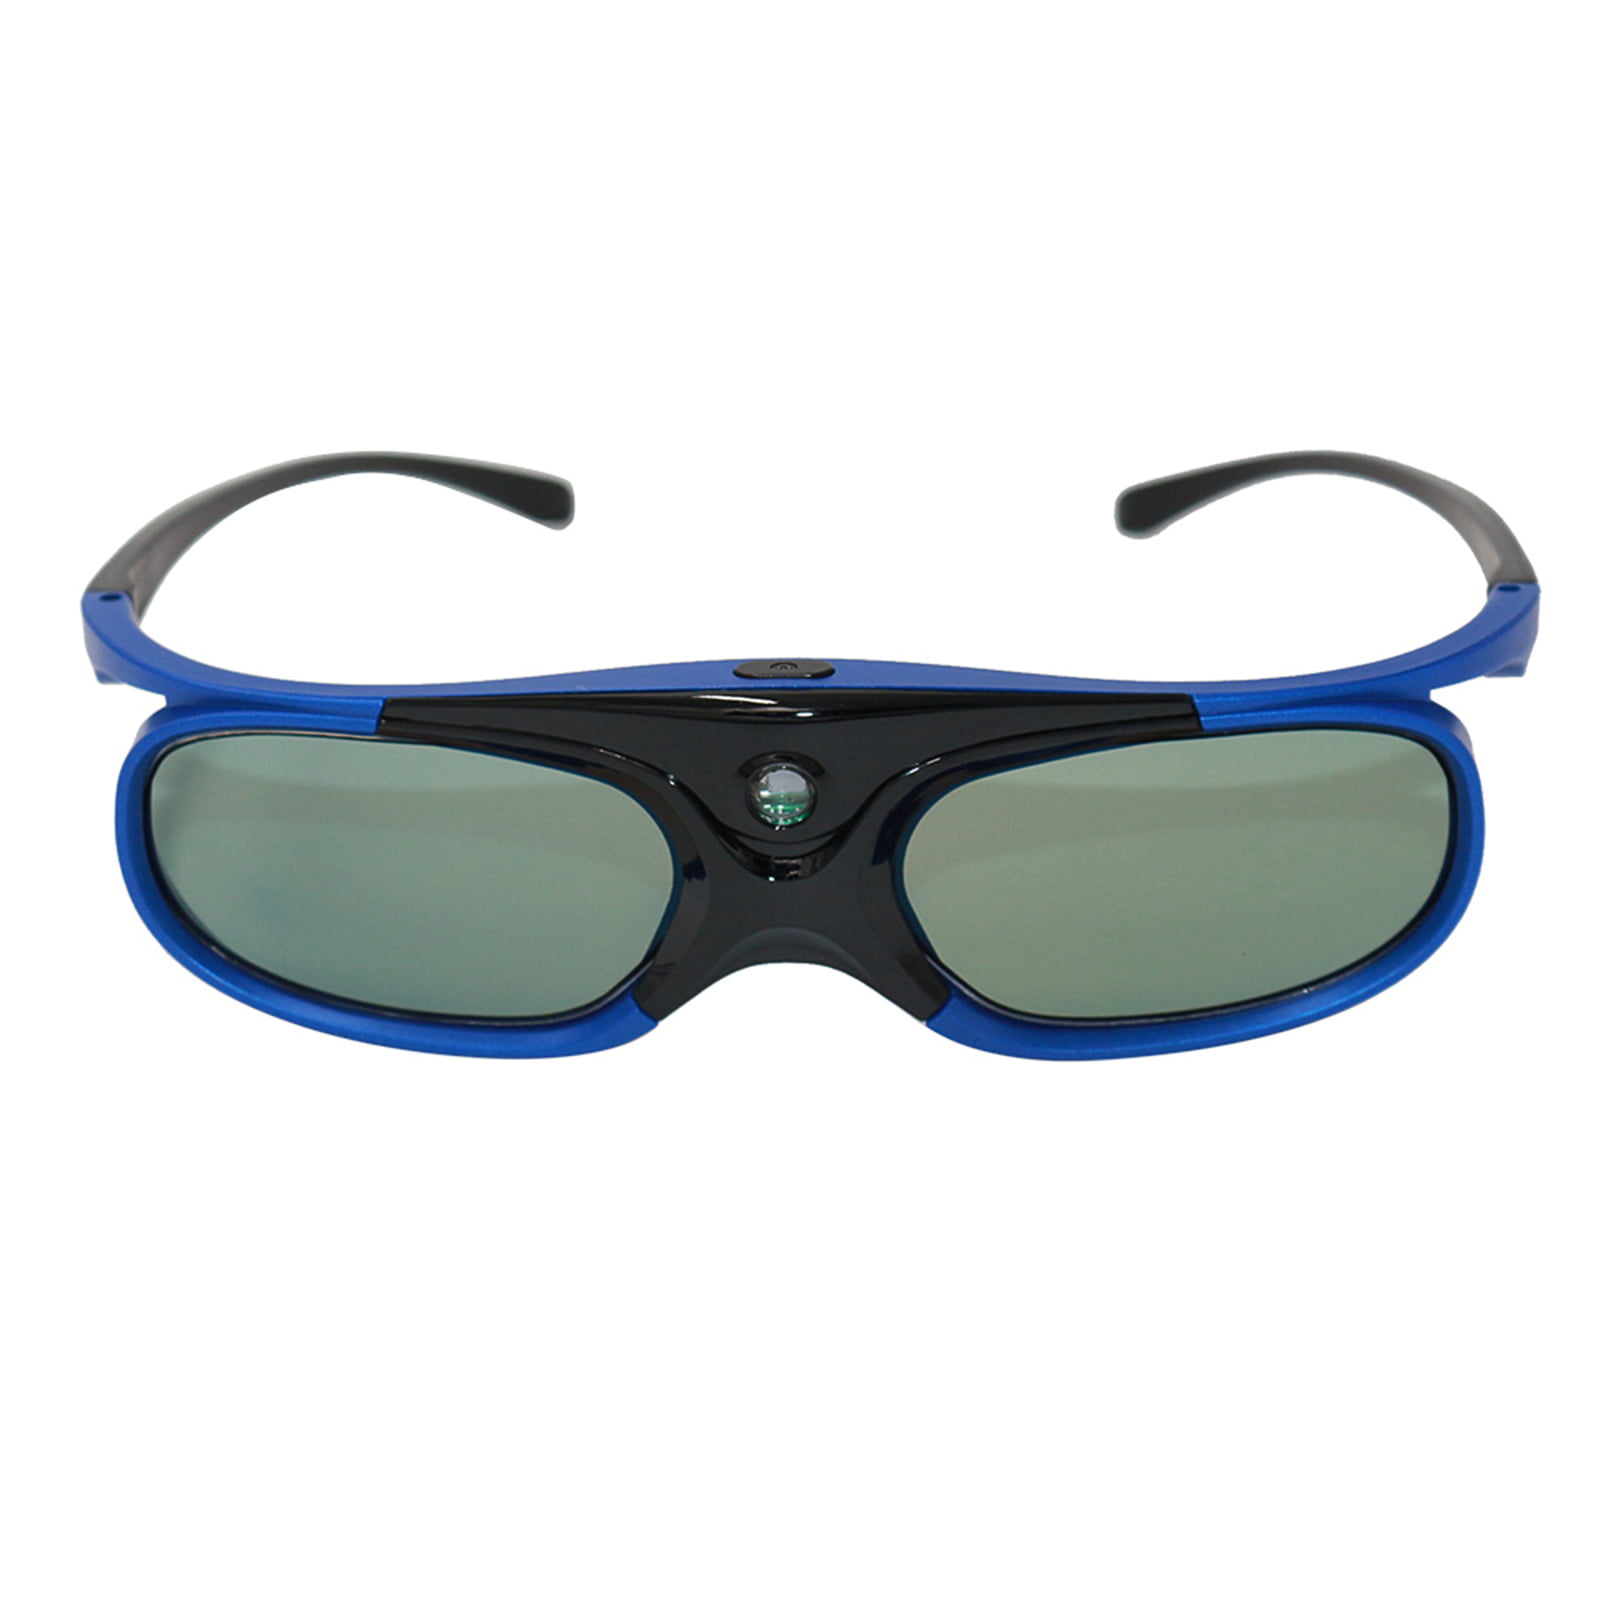 ELEPHAS 144Hz Rechargeable Active Shutter Eyewear for All DLP-Link 3D Projectors- Acer ViewSonic DLP Link 3D Glasses Panasonic Dell 4 Pack Viewsonic etc BenQ Vivitek Optoma 